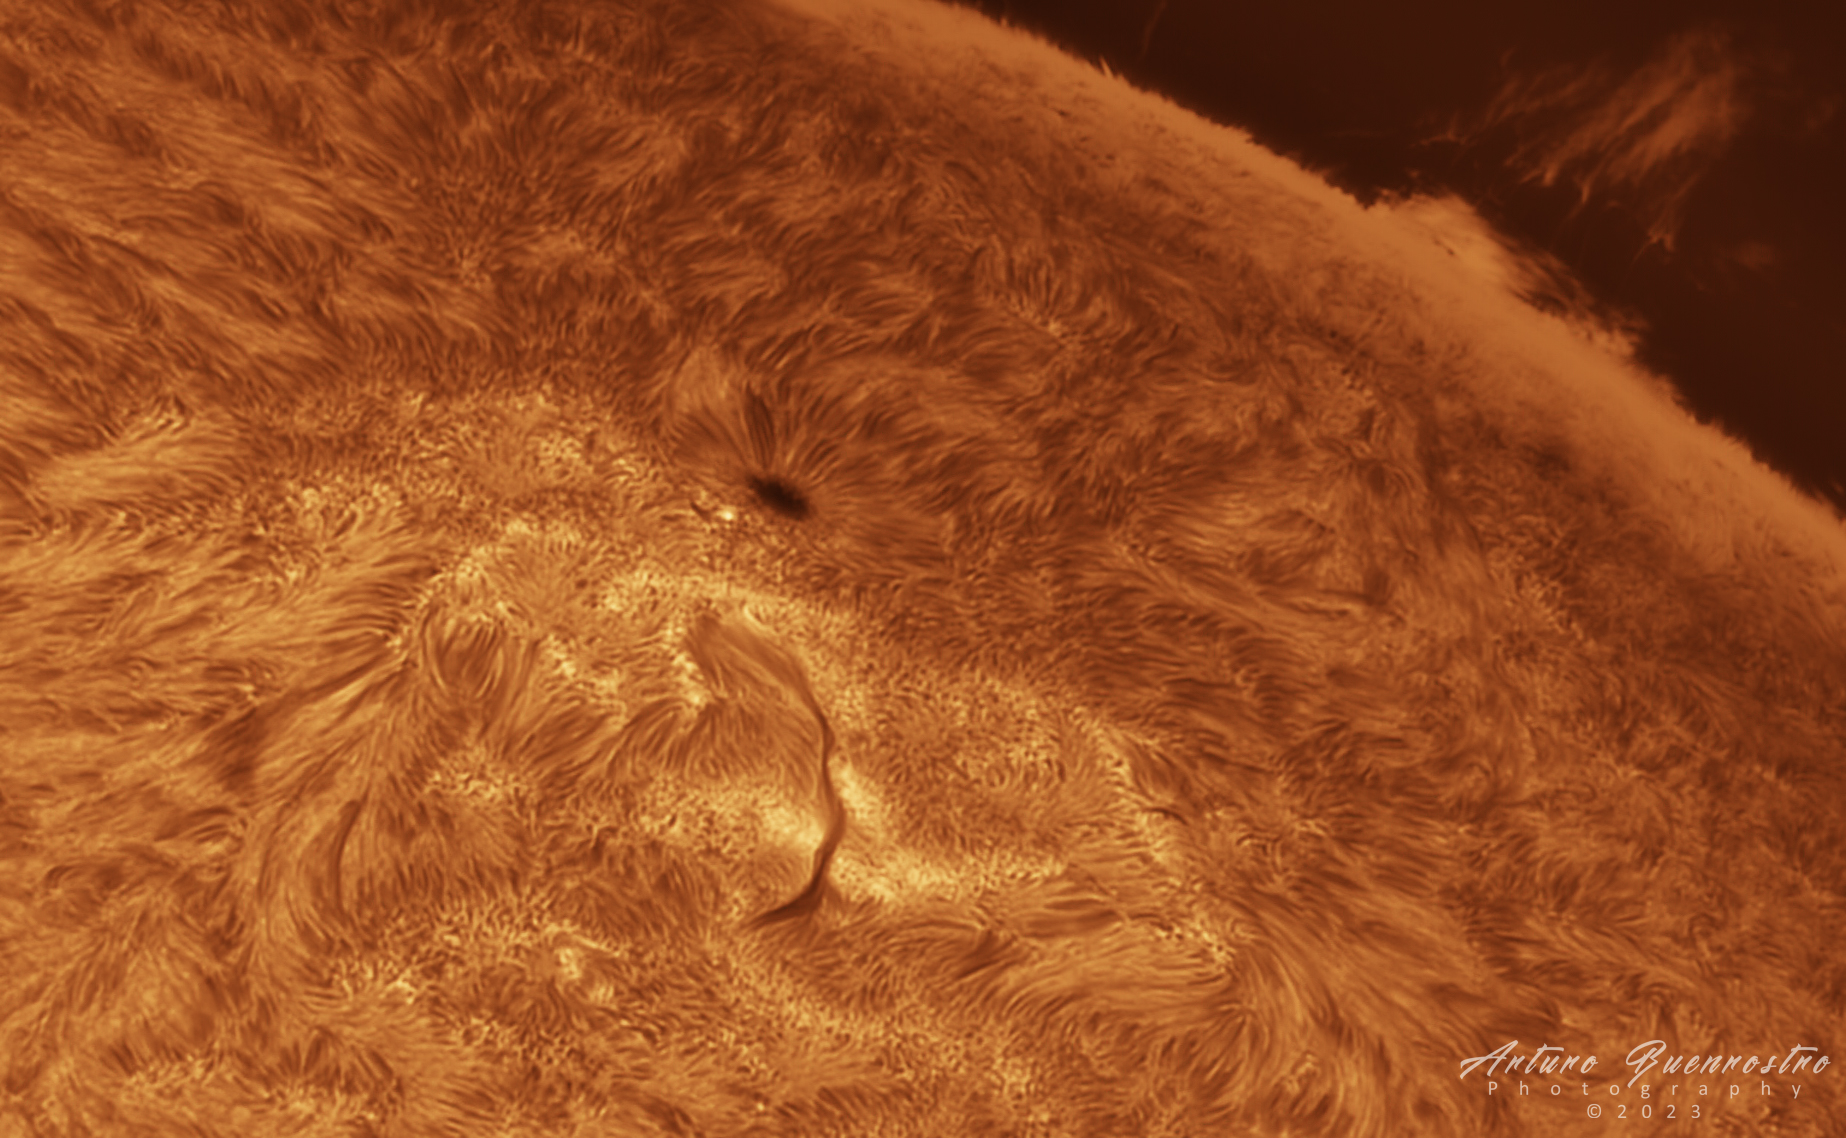 The Sun Lunt Solar Systems